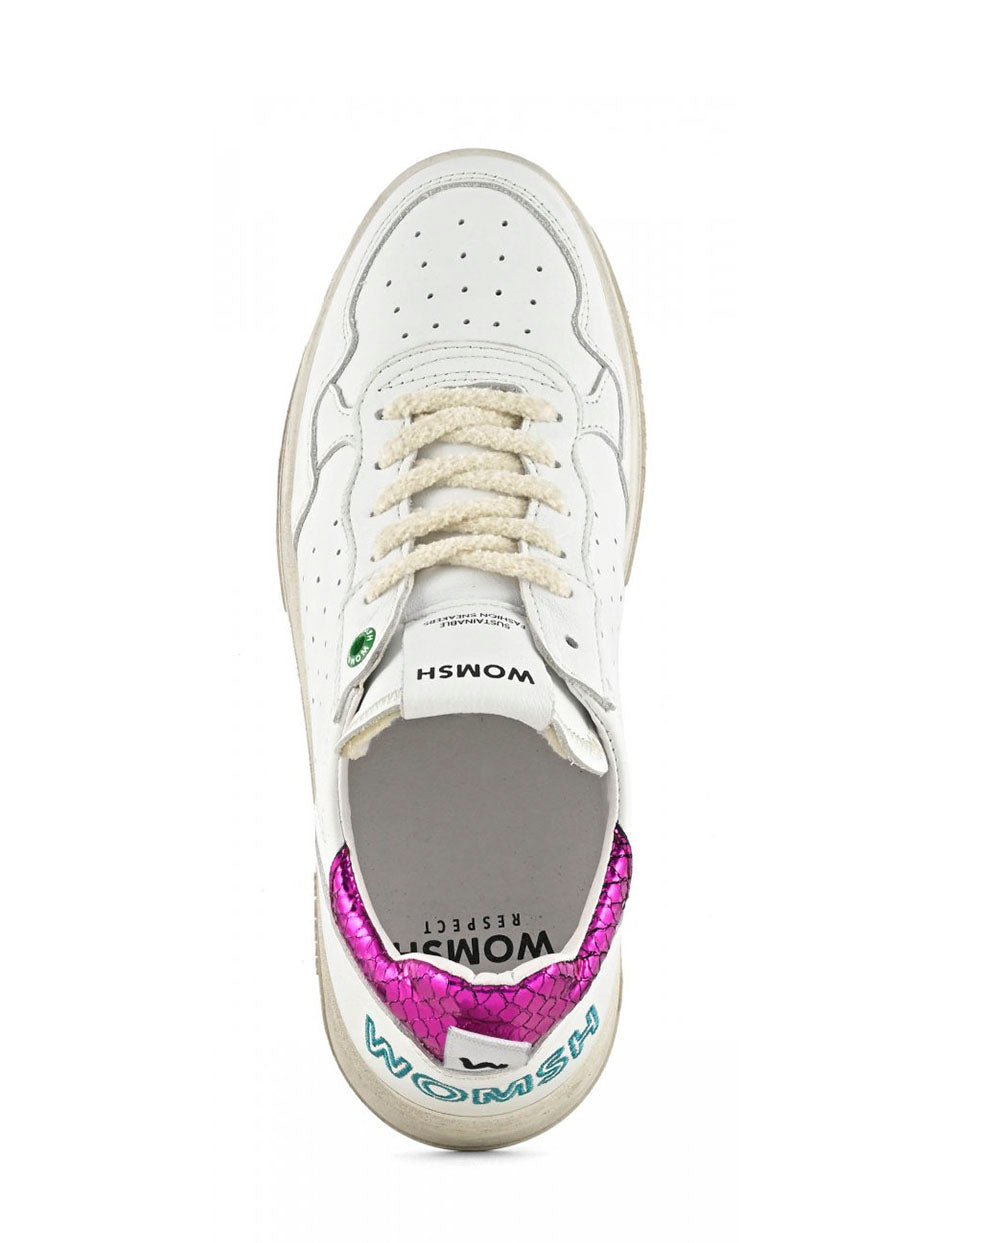 Womsh Hyper Sneaker white fuxia